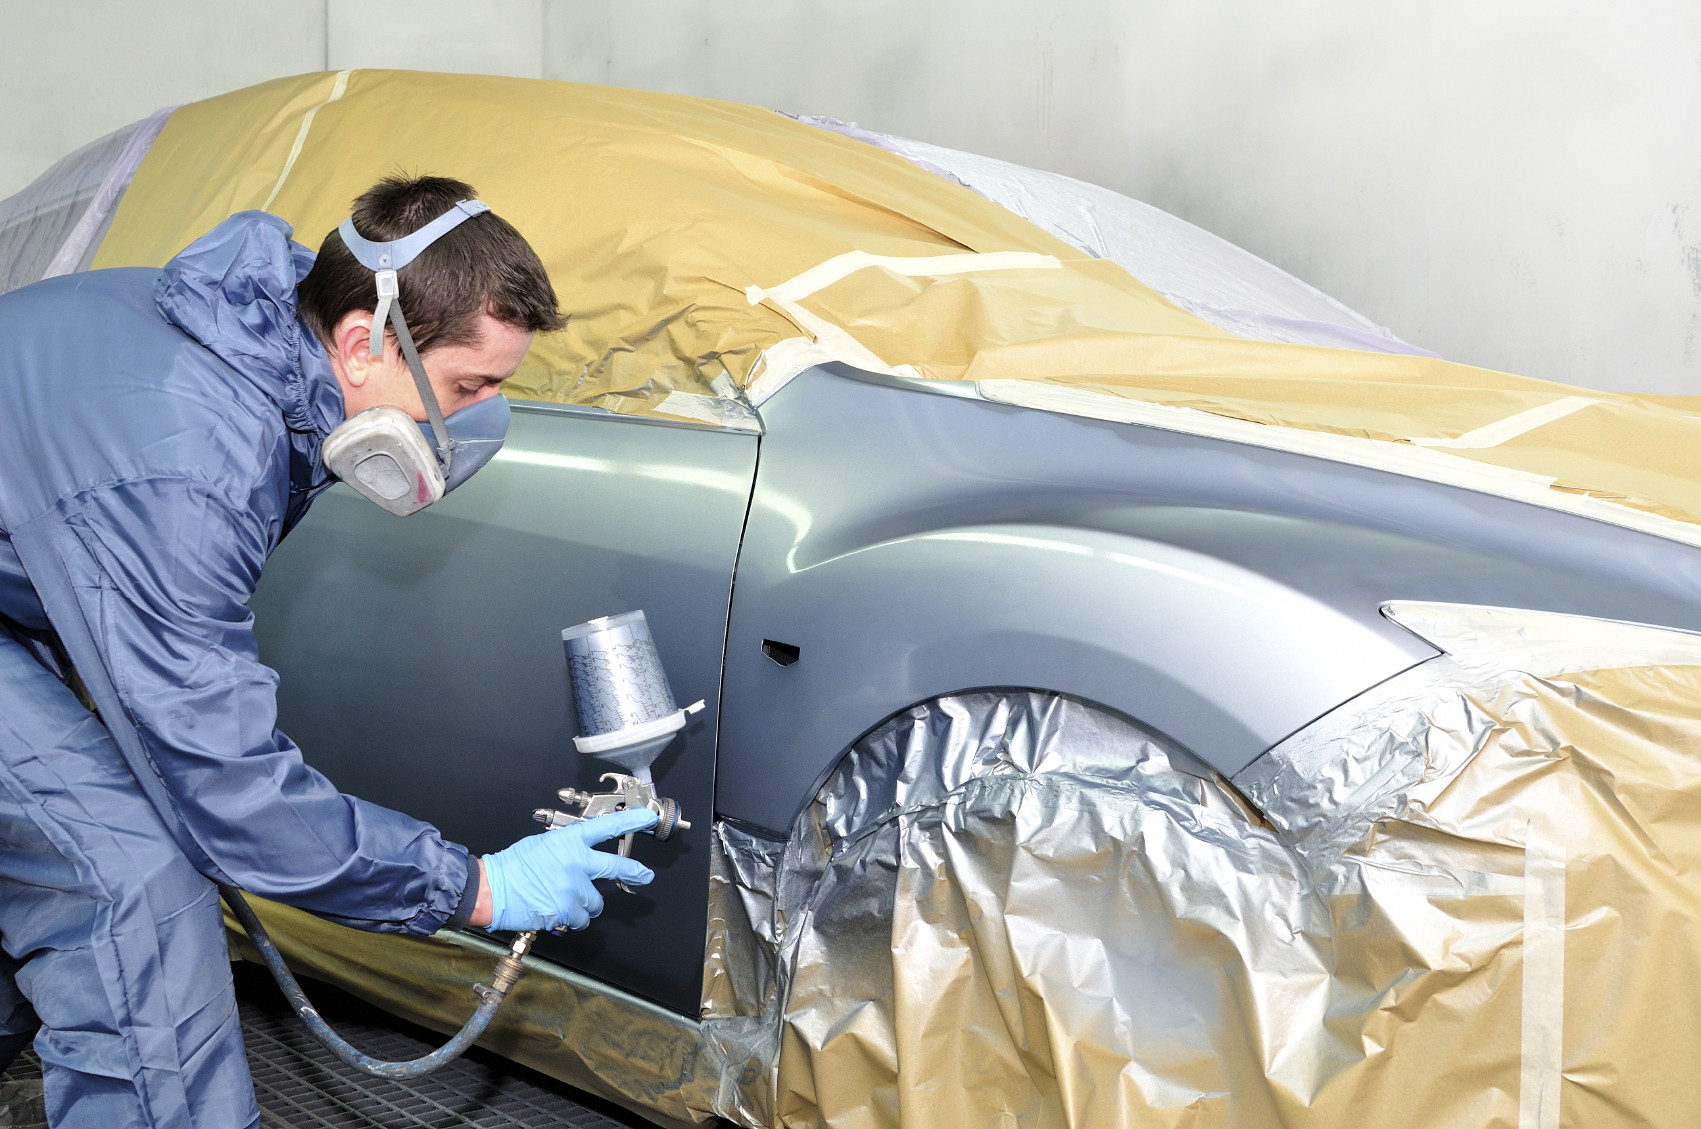 Best ideas about DIY Car Paint Job
. Save or Pin Car Paint Job Tempe Arizona – DIY Auto Paint Tips Now.